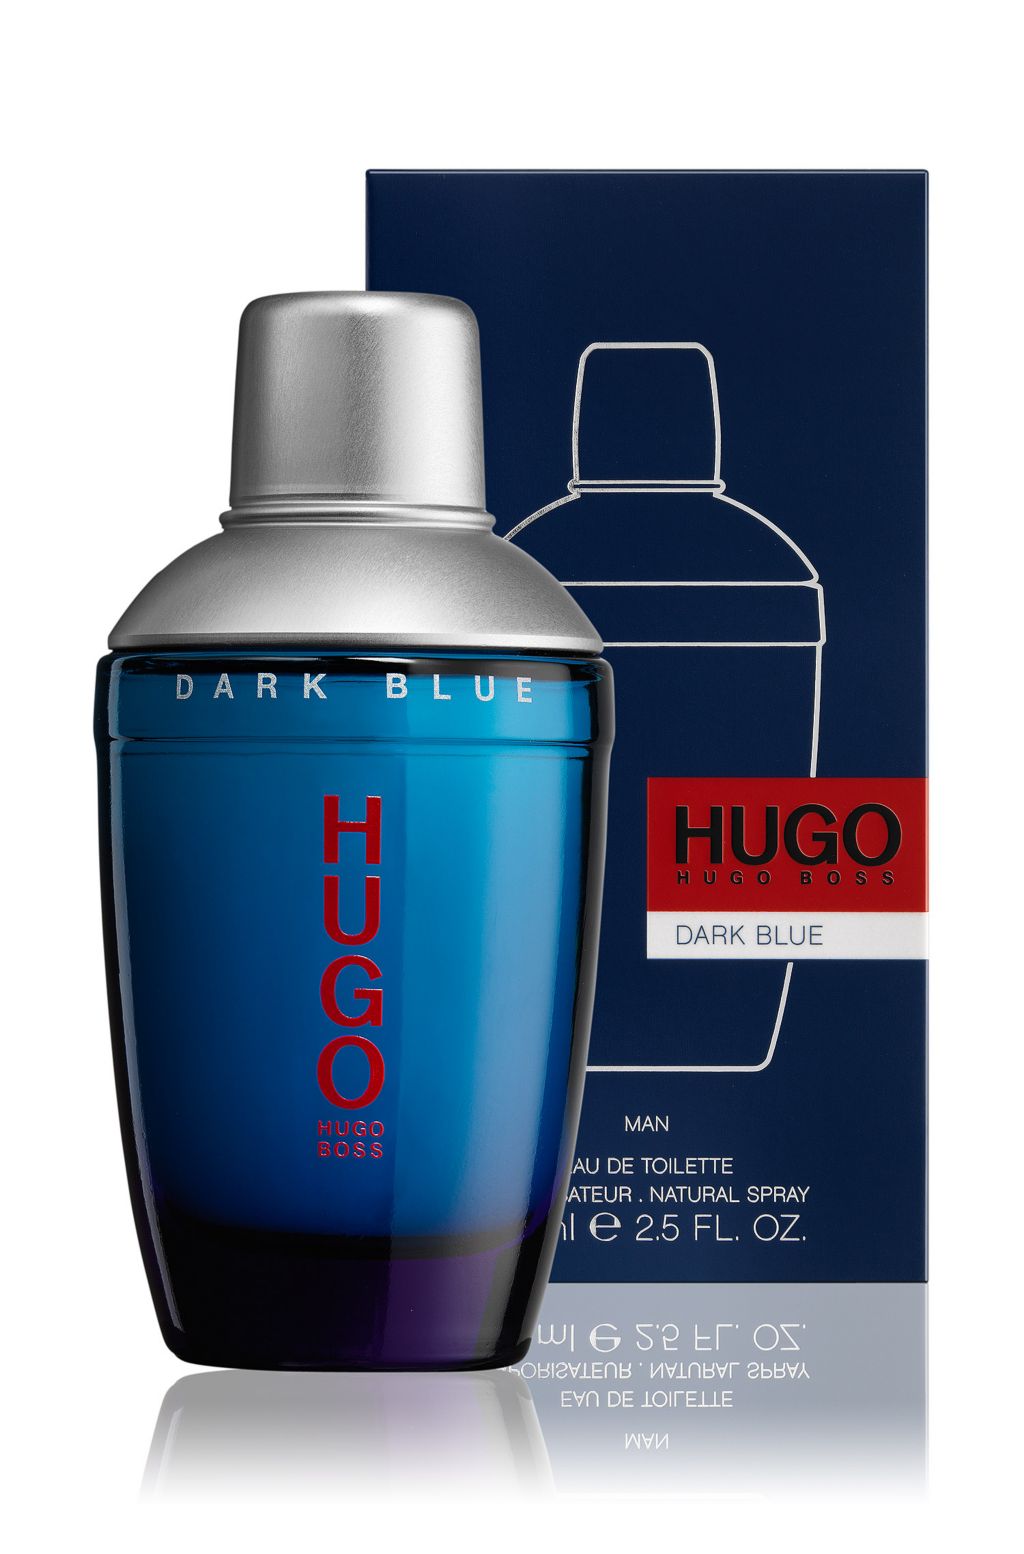 Hugo Dark Blue Hugo Boss (1999) and the 